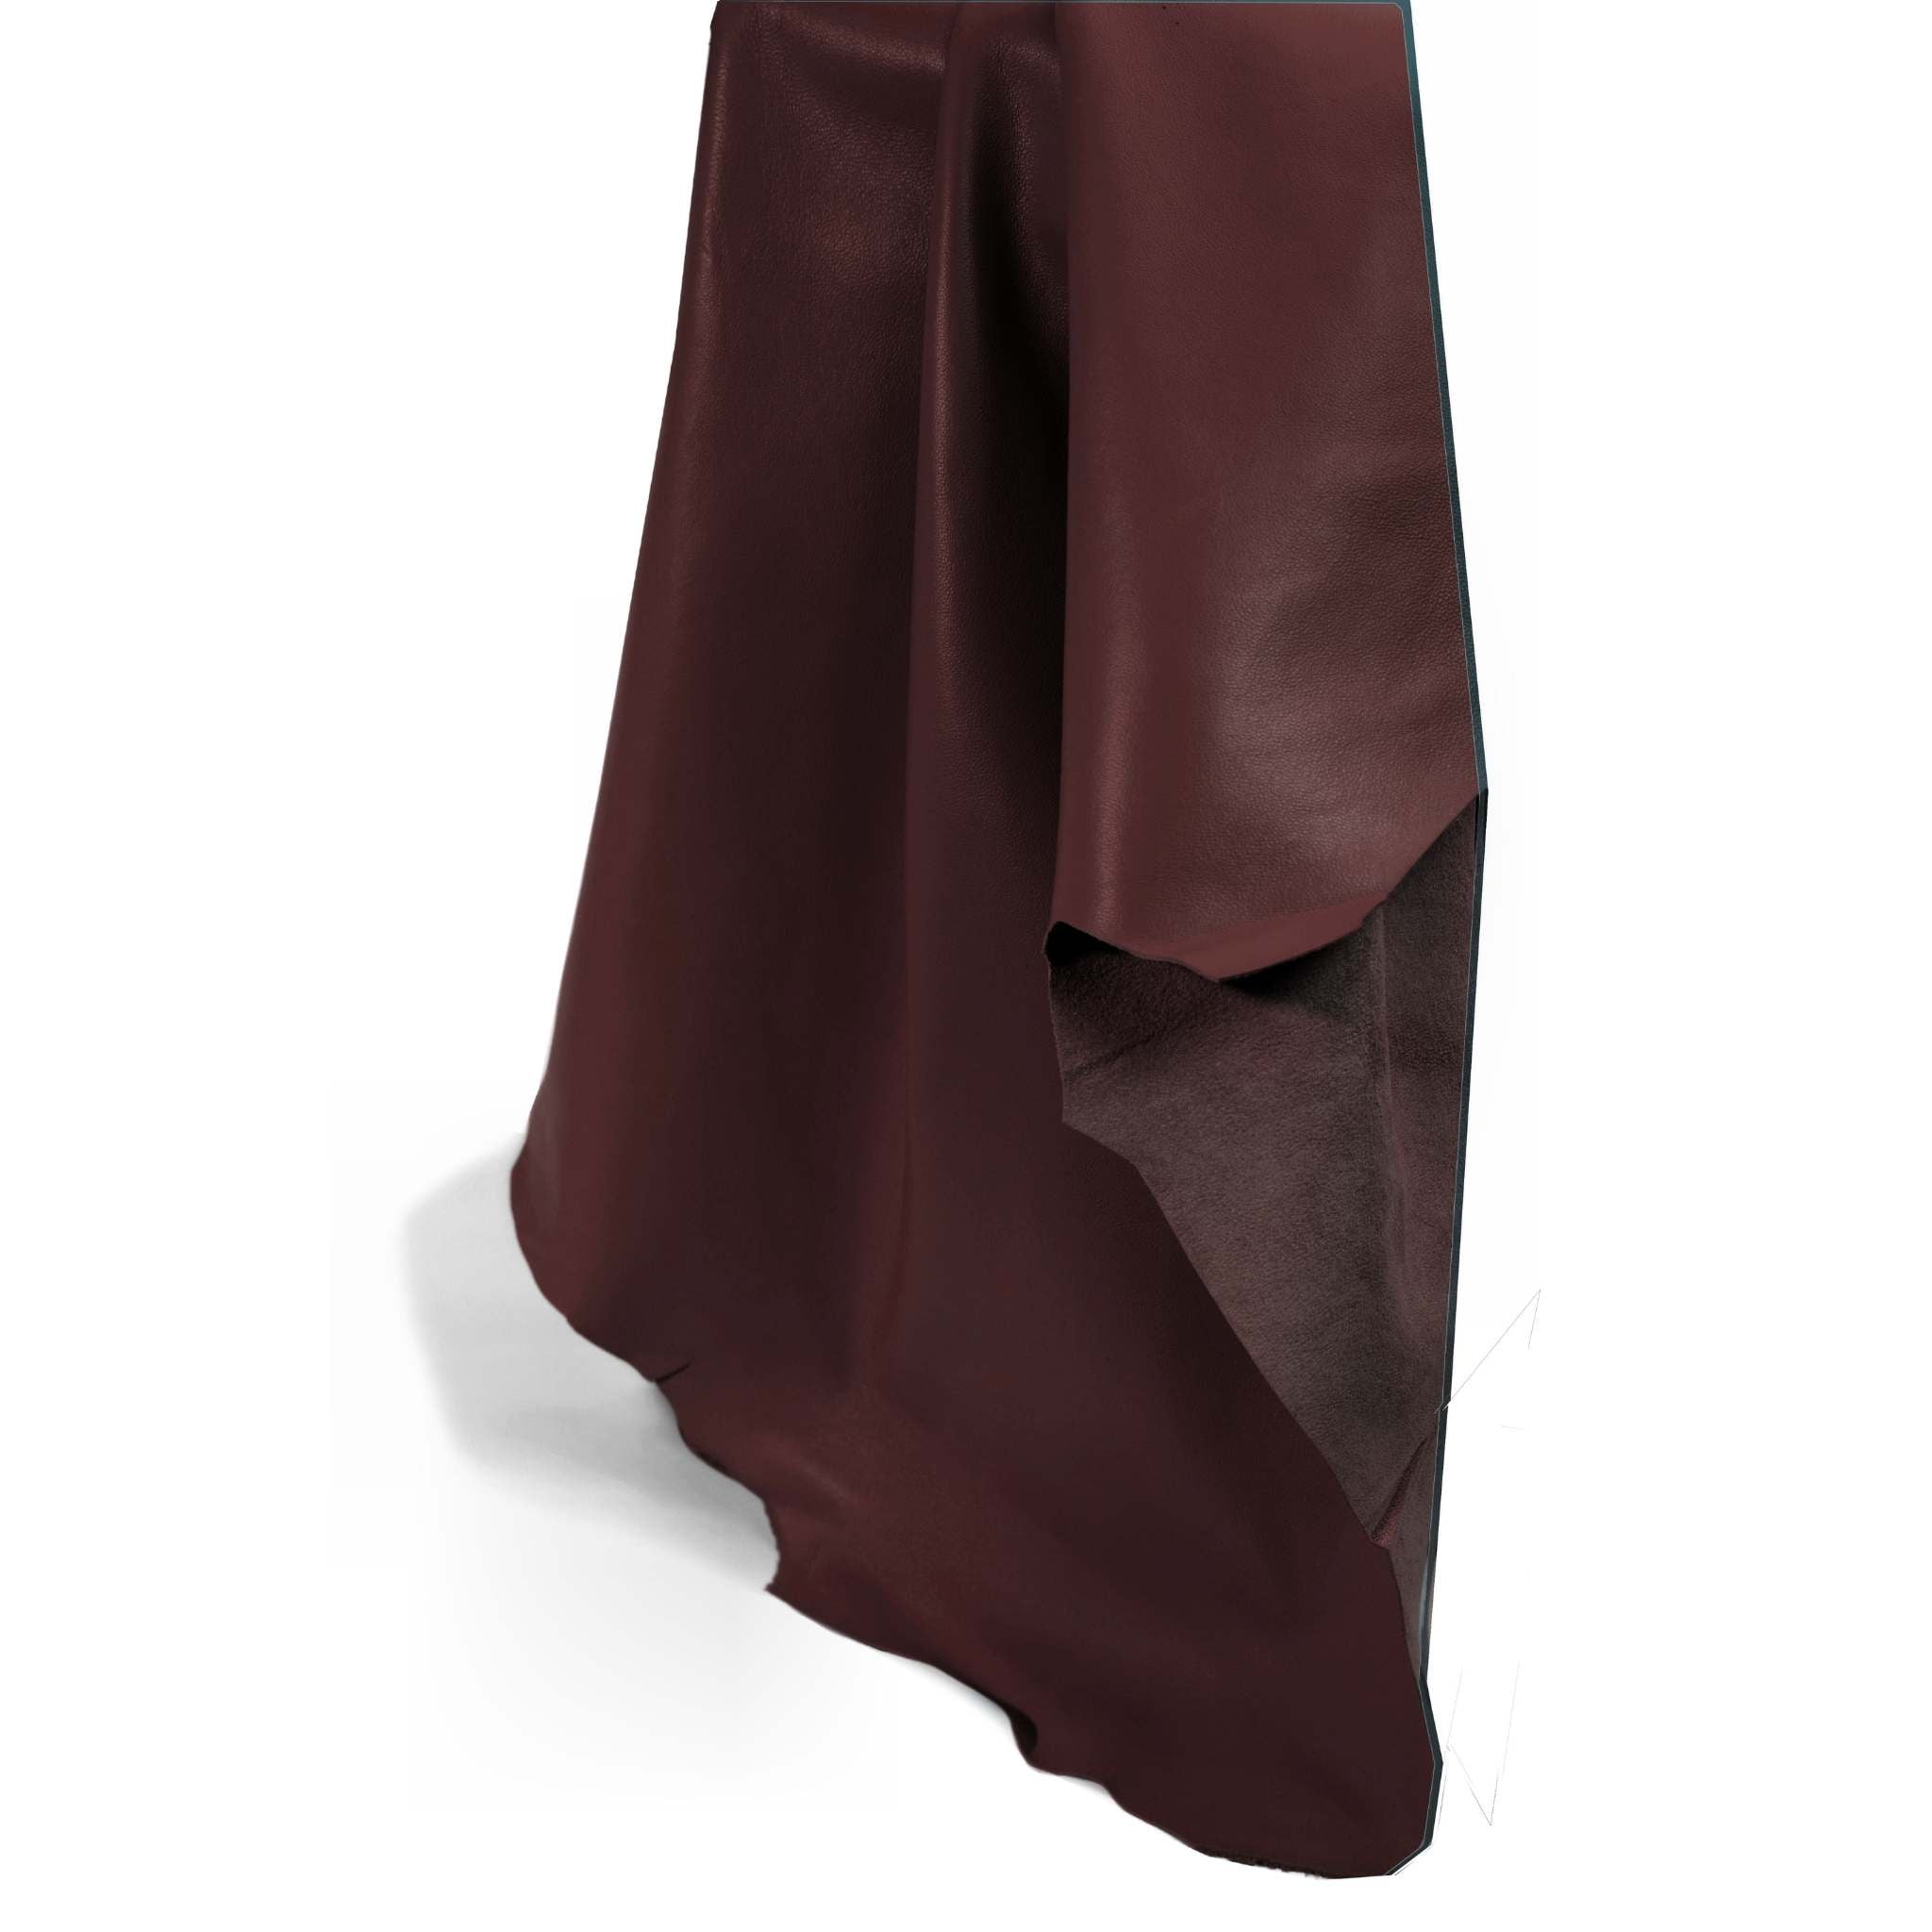 Chestnut brown soft drape sheepskin nappa leather ideal for garment making